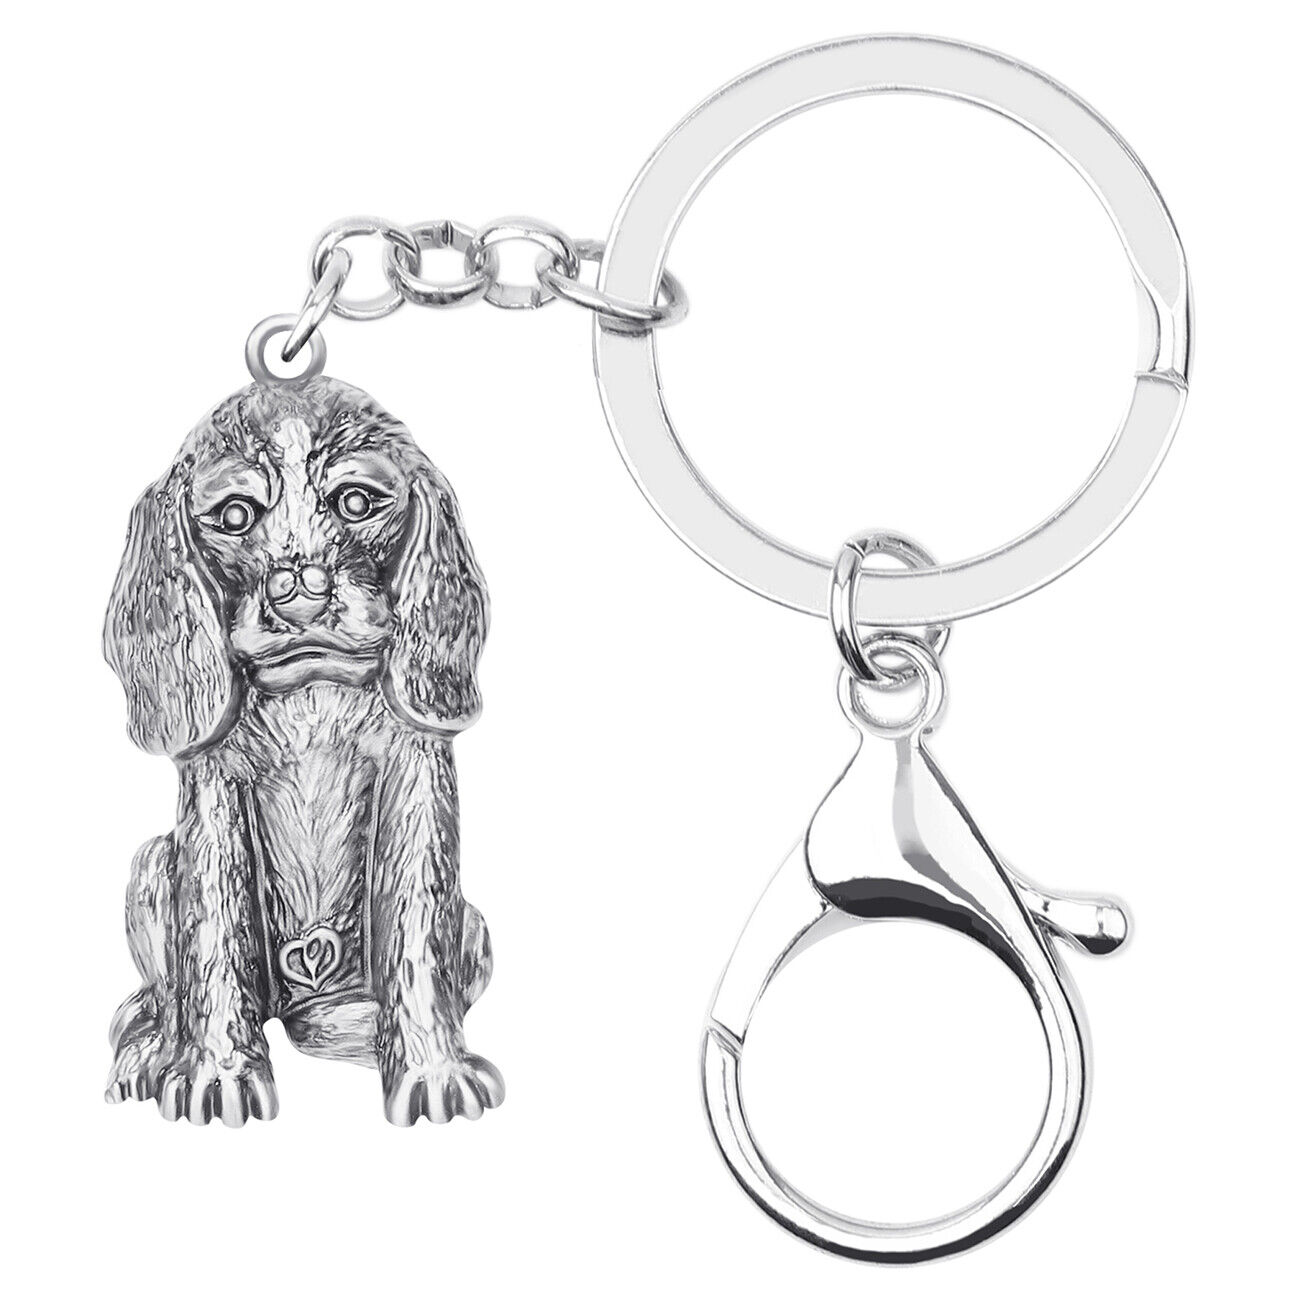 Enamel Antique Silver Labrador Dog Keychains Car Bag Key Ring Pets Charms Gifts